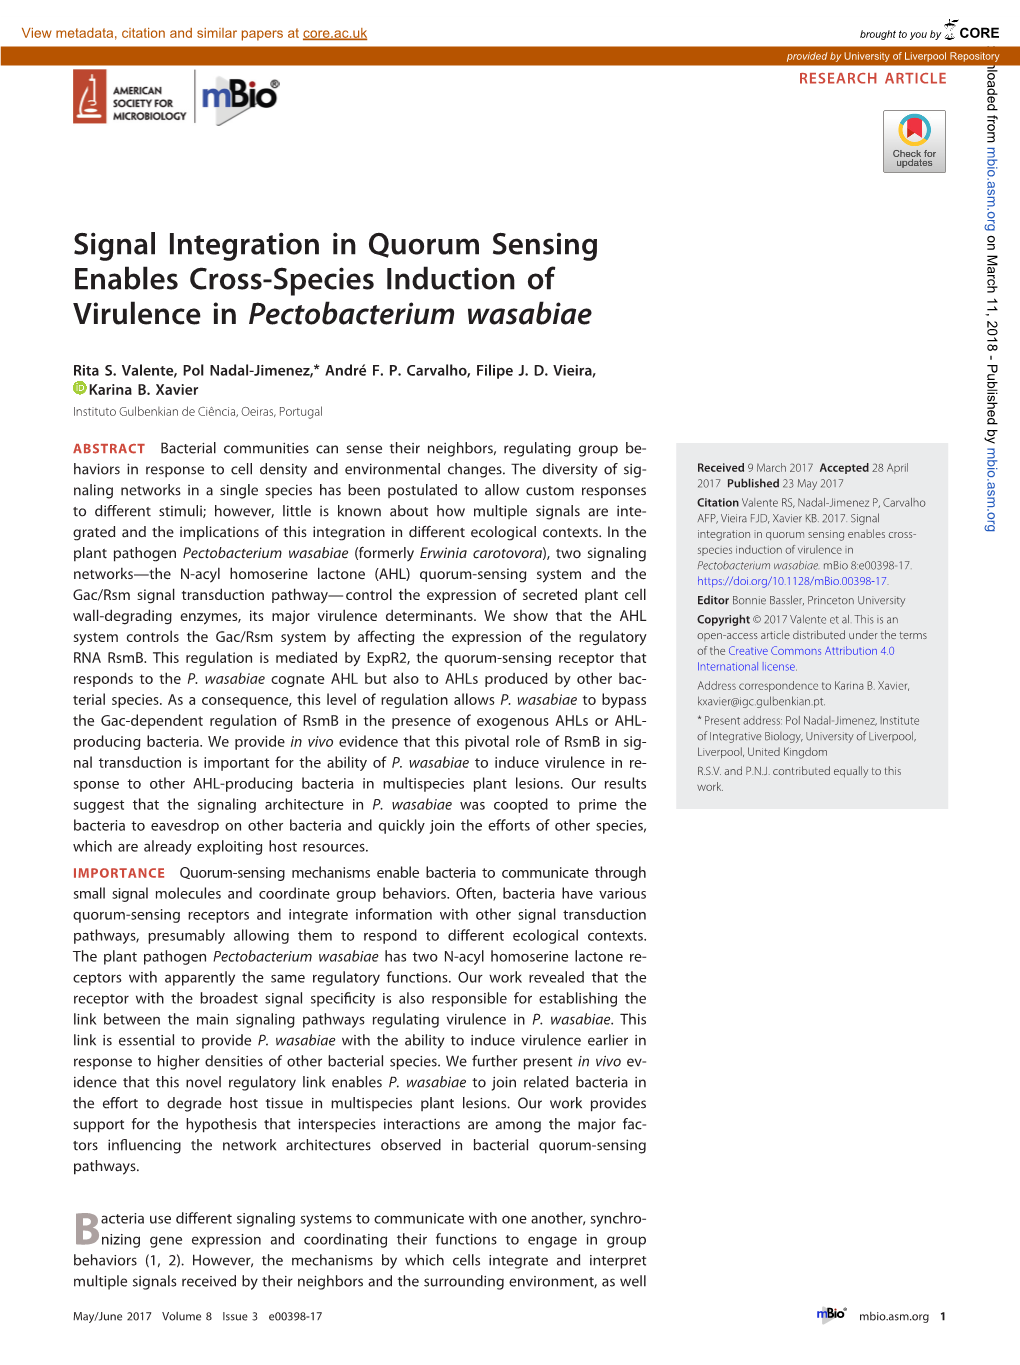 Signal Integration in Quorum Sensing Enables Cross-Species Induction Of